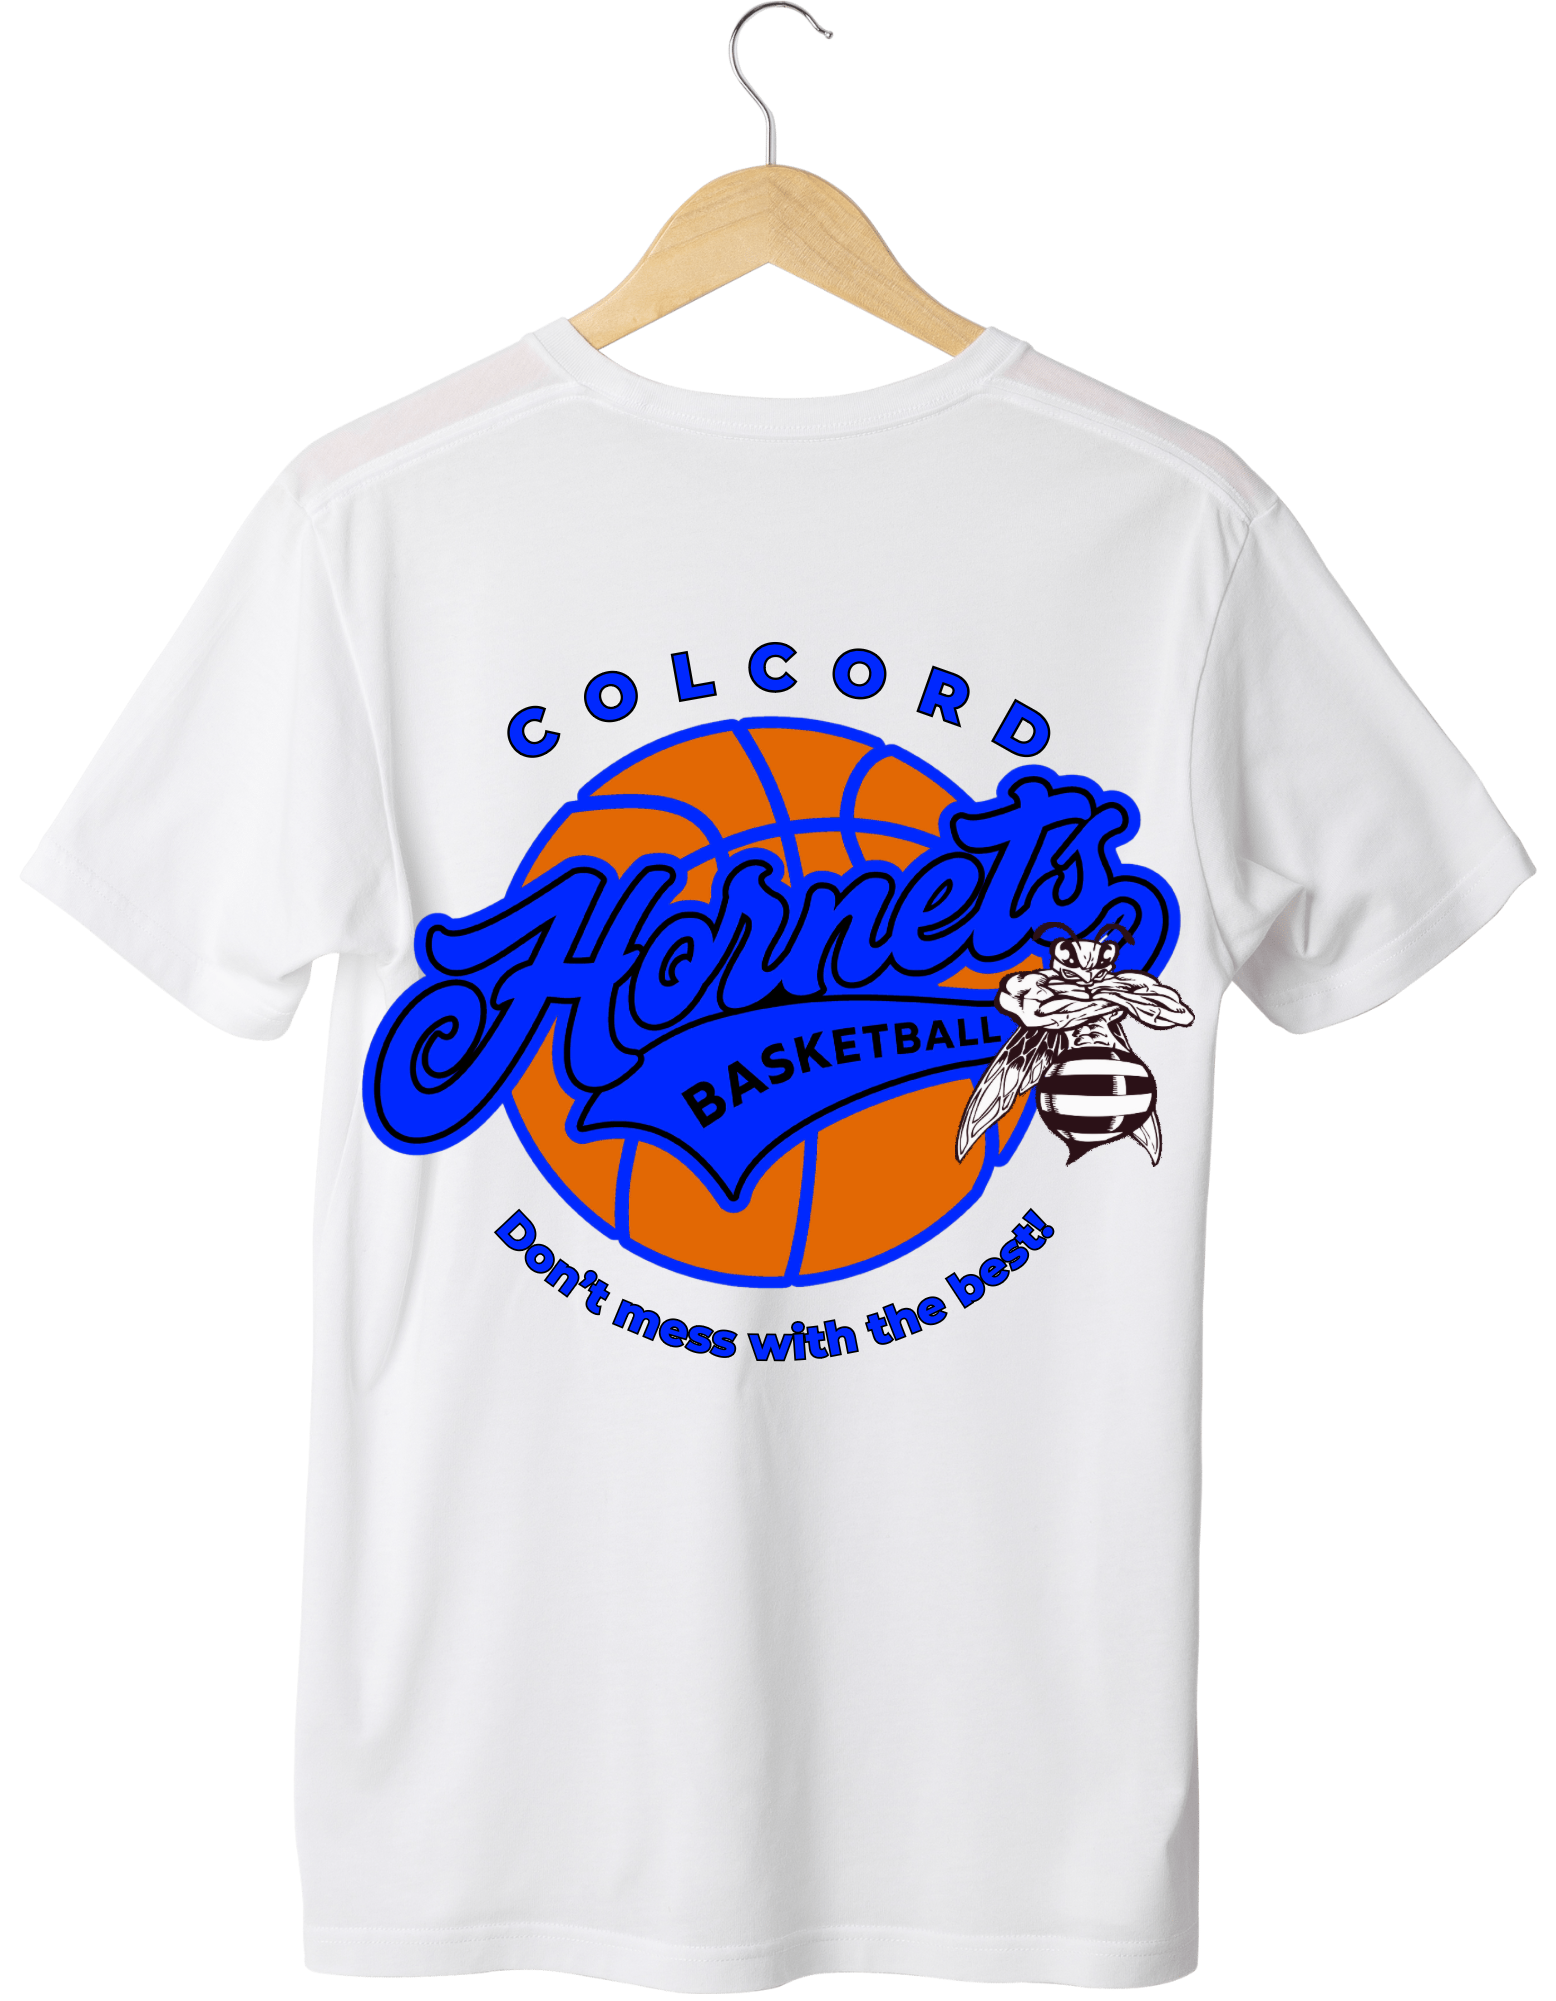 Colcord Basketball “The Best” Design T-Shirt